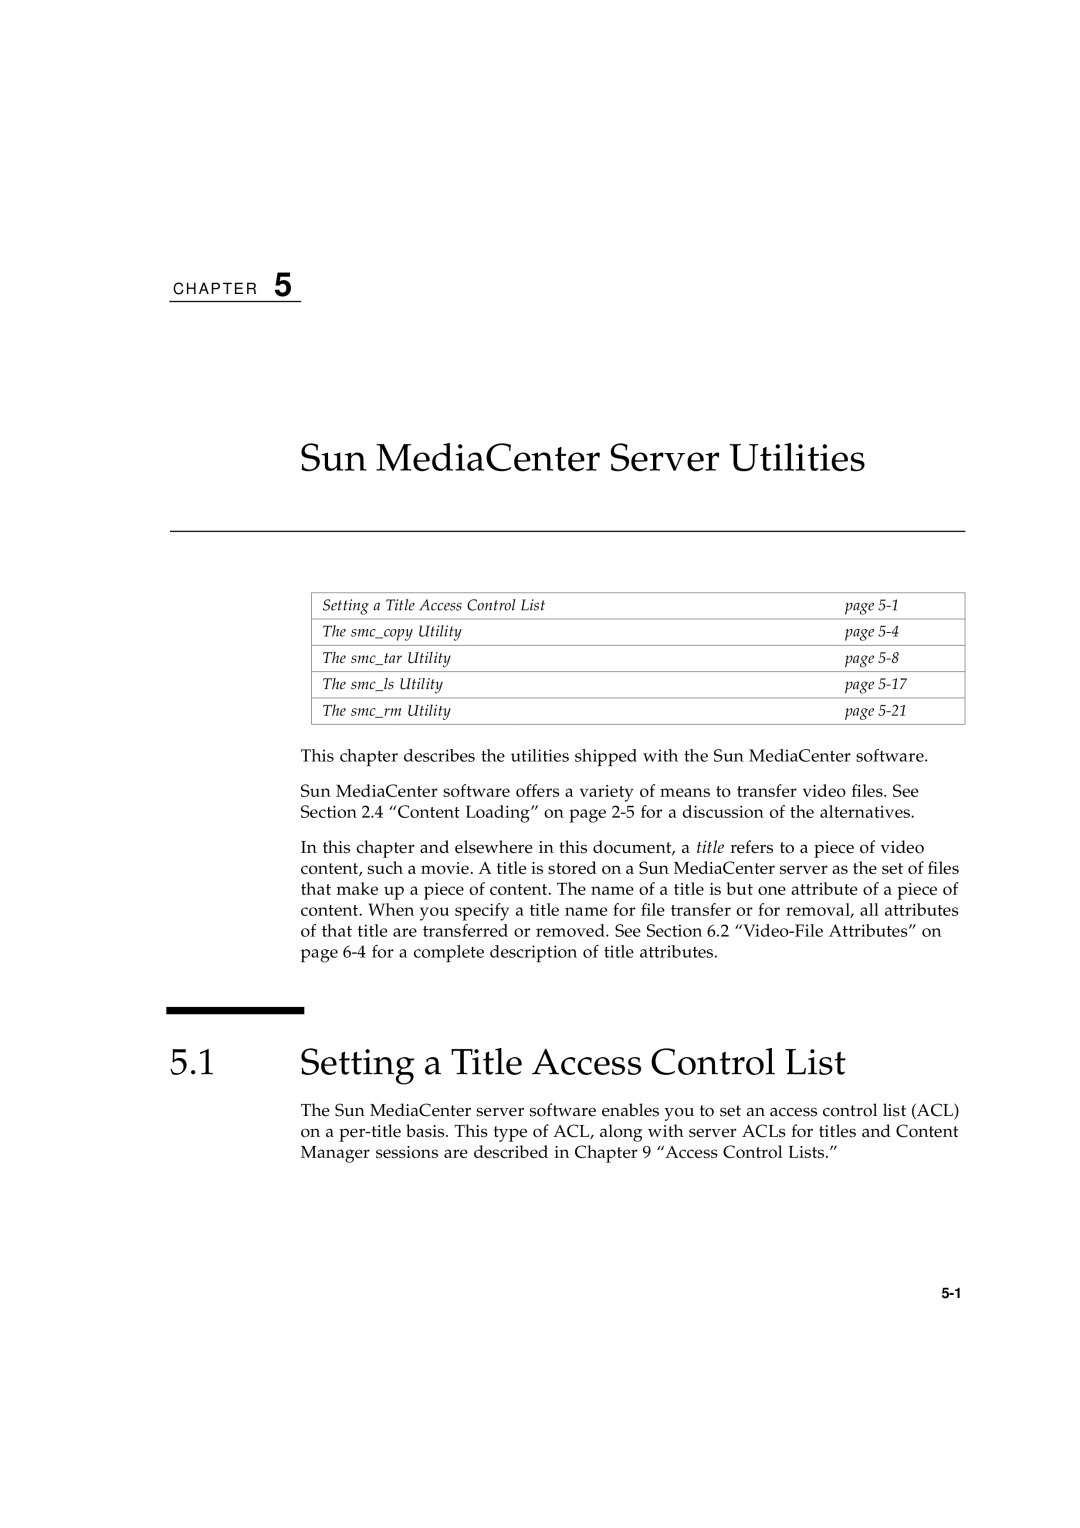 Sun Microsystems 2.1 manual Sun MediaCenter Server Utilities, Setting a Title Access Control List 